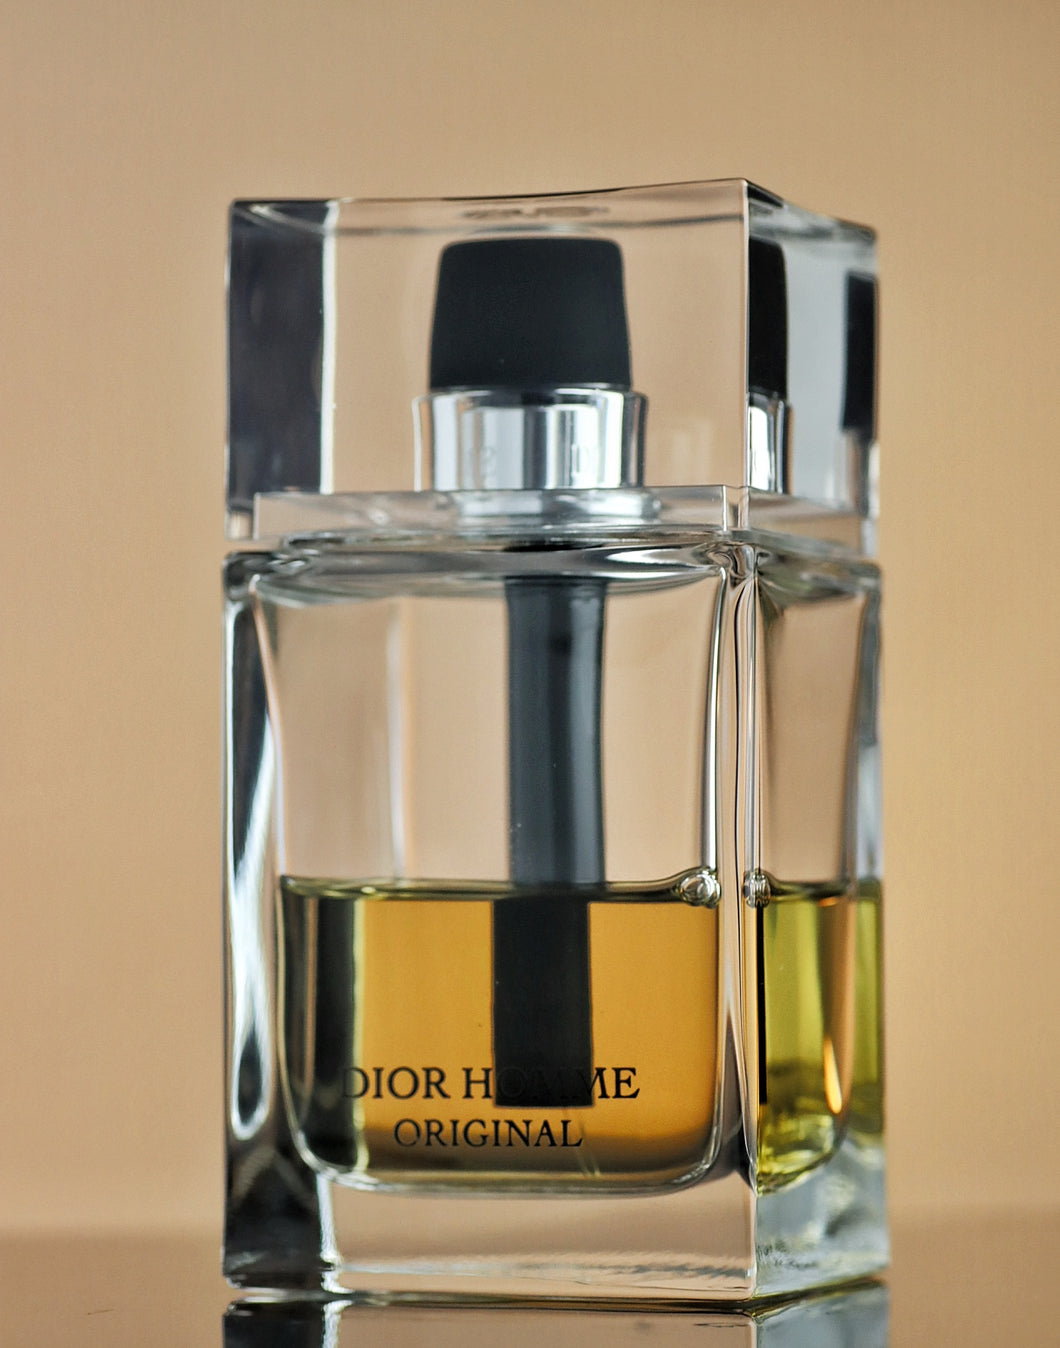 Dior Homme Intense, Fragrance Sample, Perfume Sample